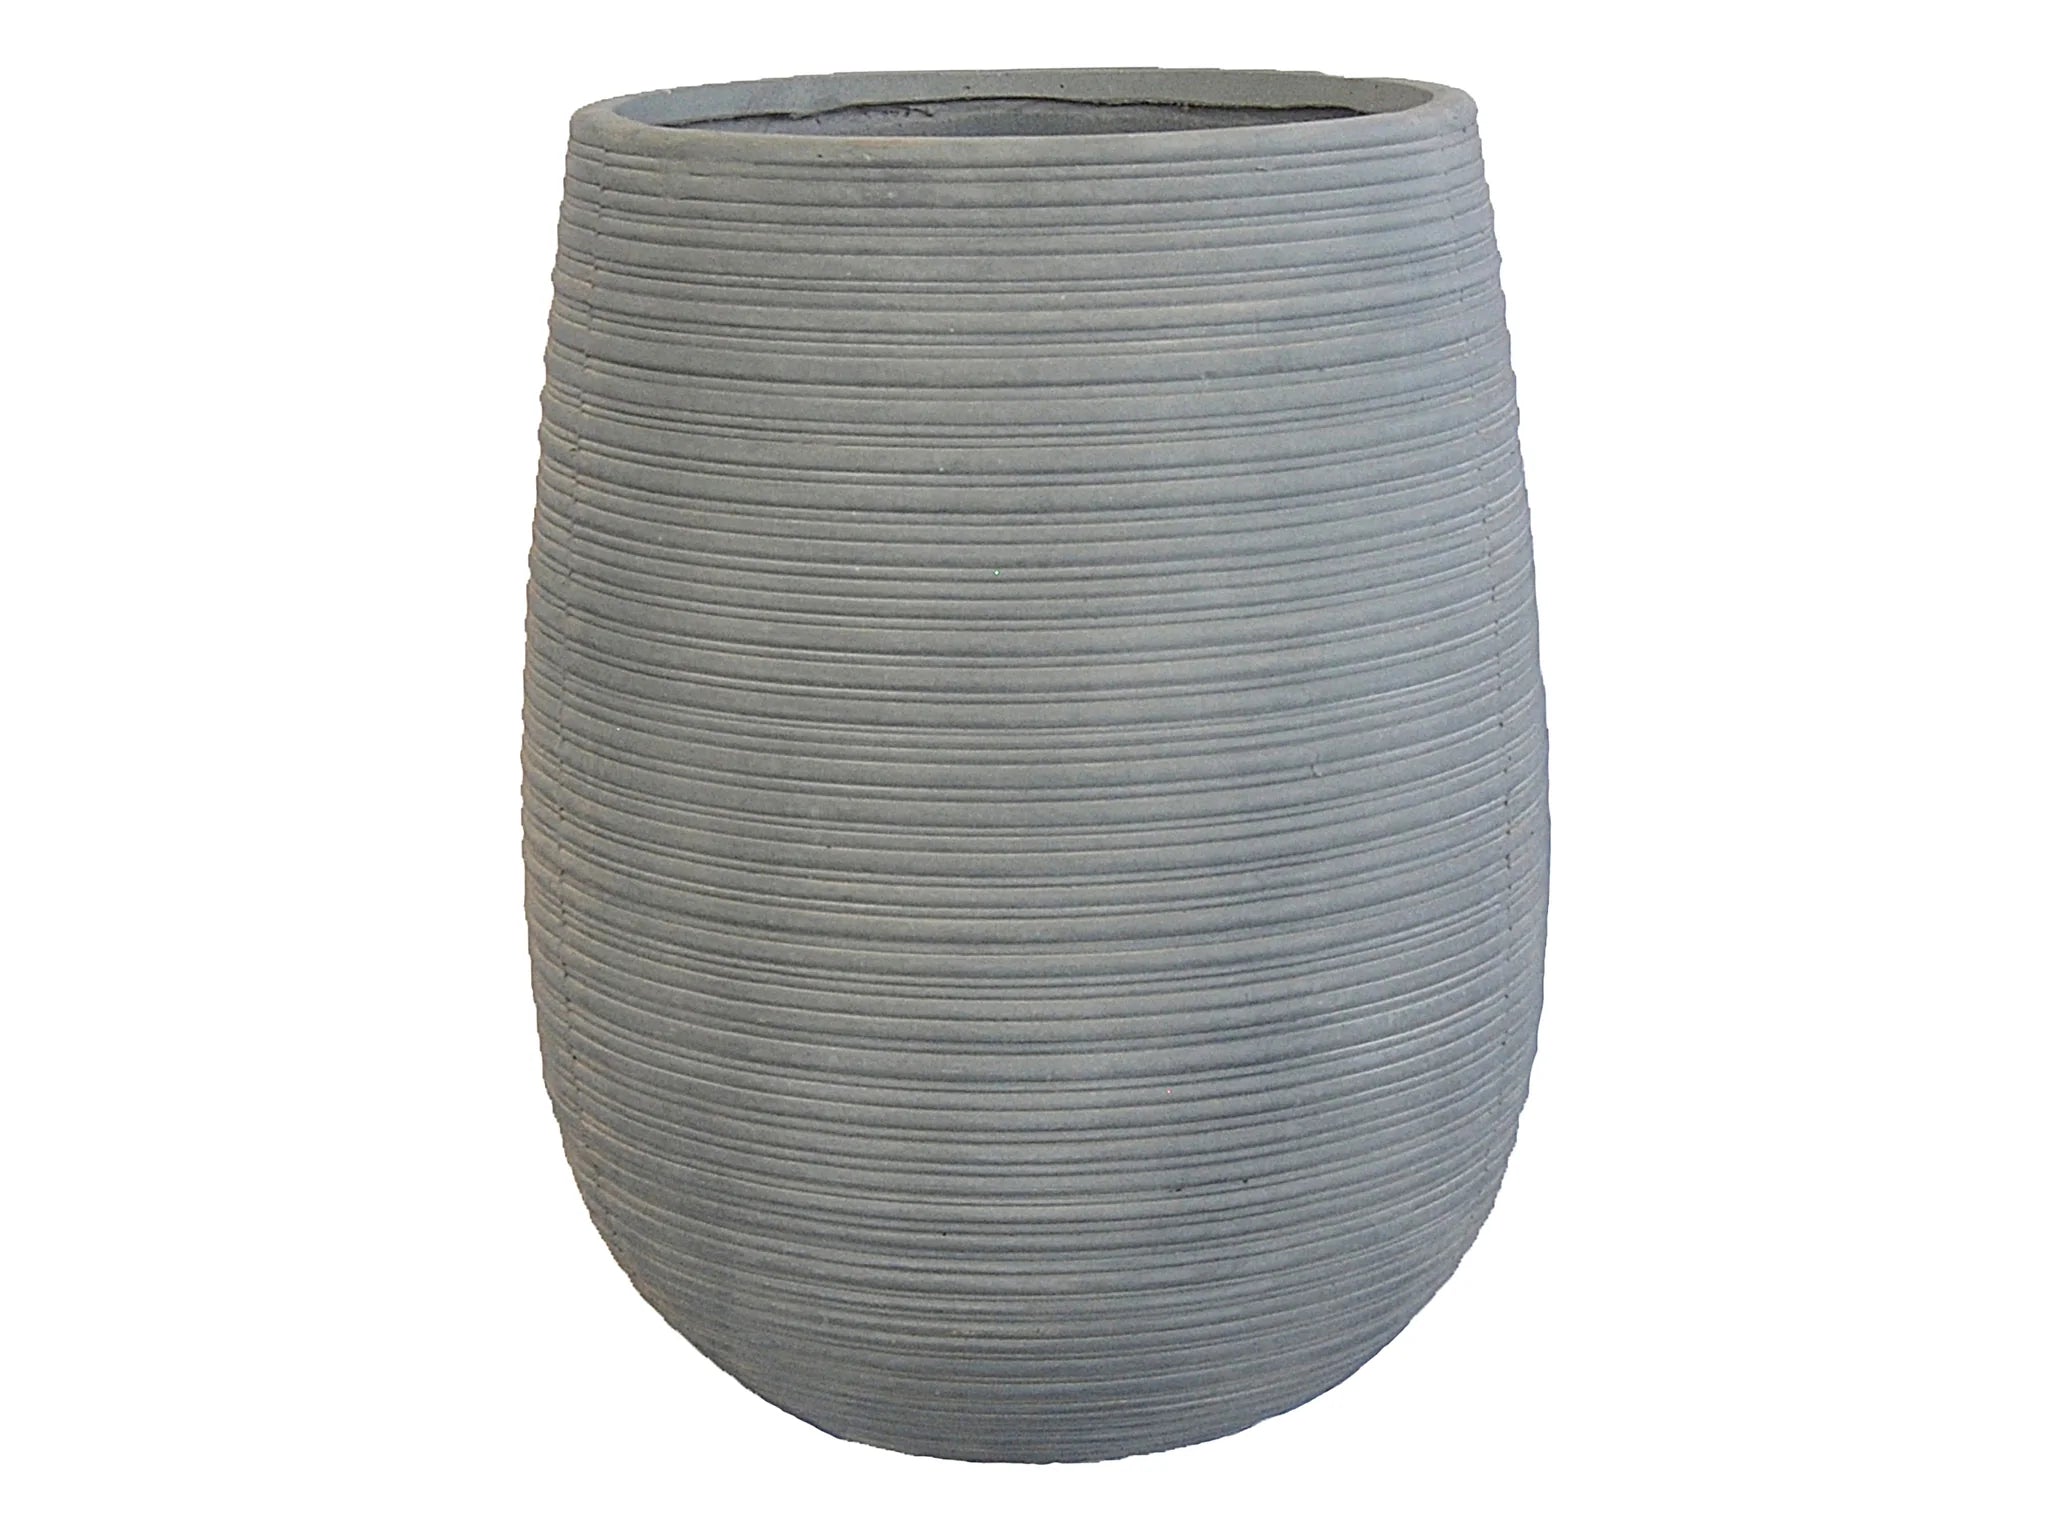 Fiber Cement Striped Pot - Gray - Plant Studio LLC